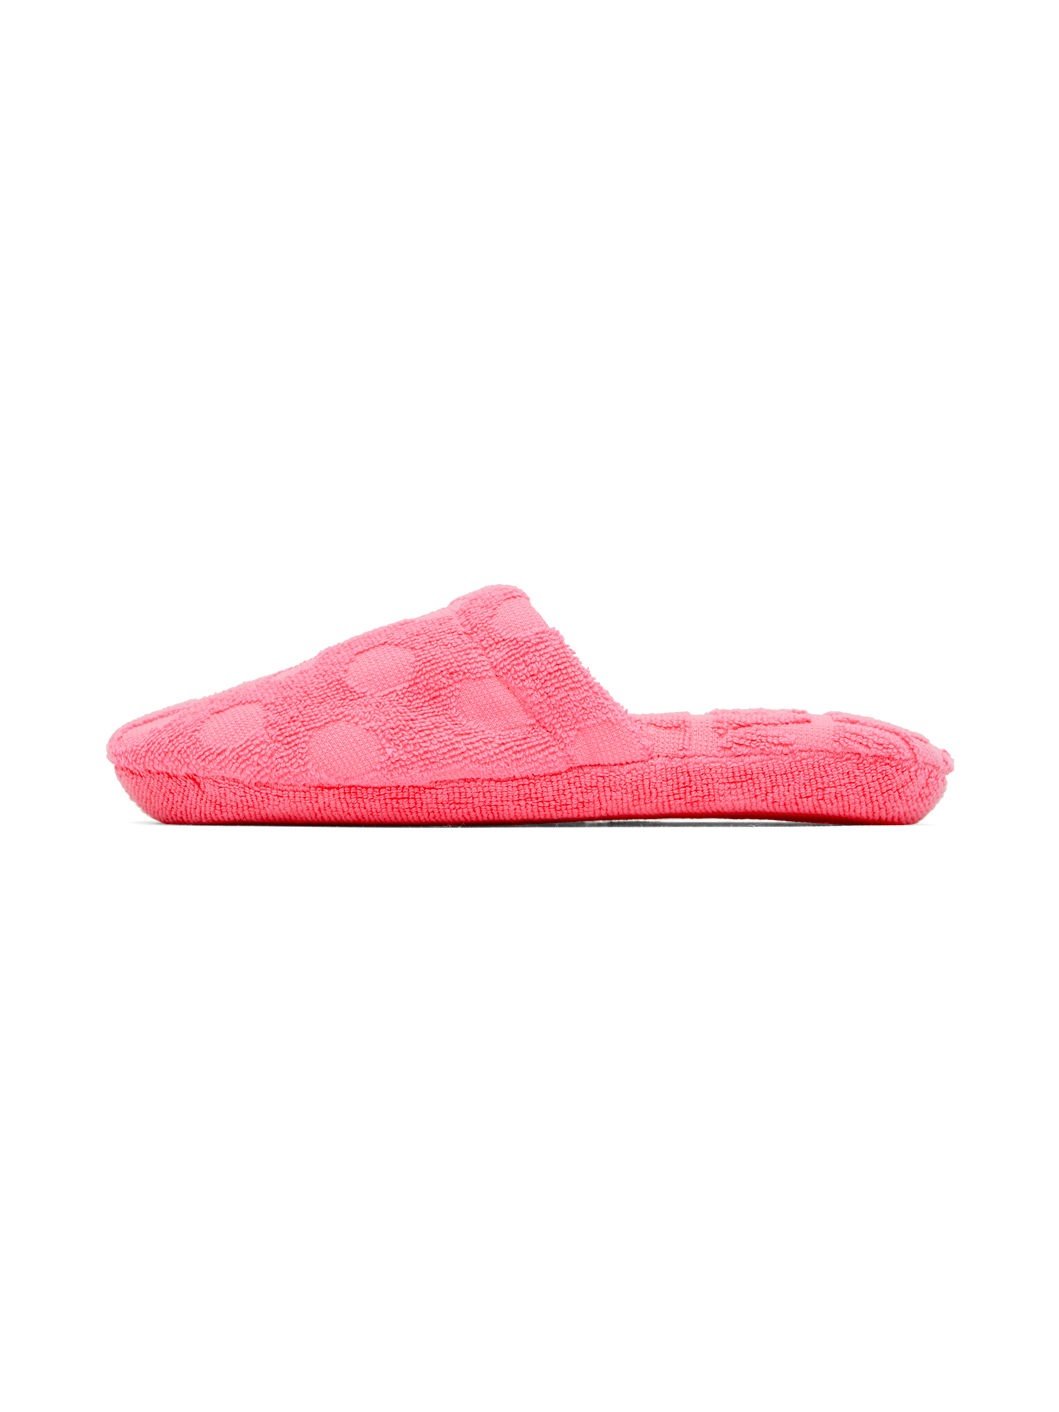 Pink Polka Dot Slippers - 3